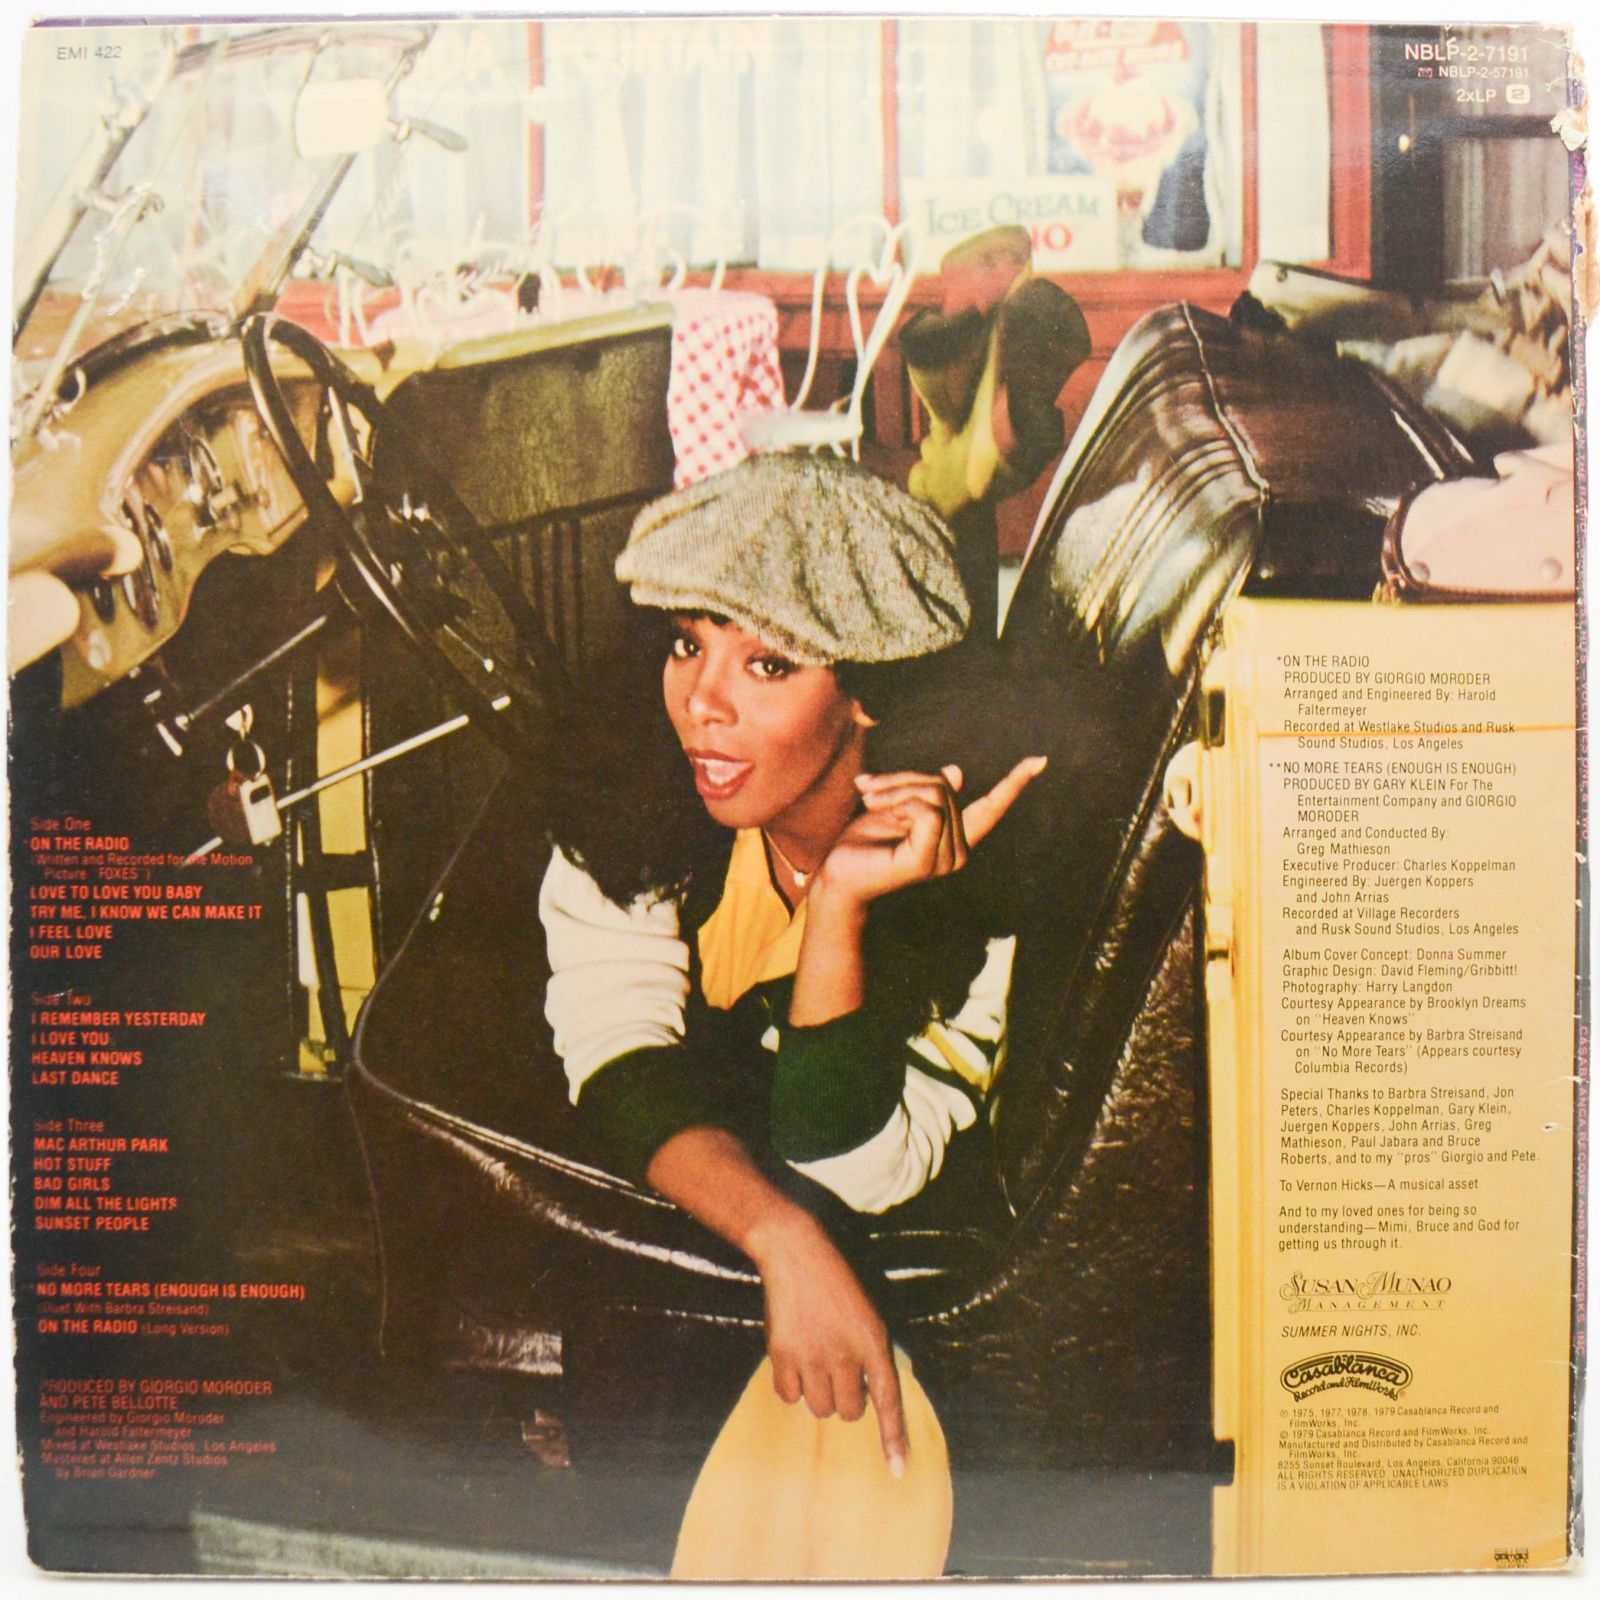 Donna Summer — On The Radio - Greatest Hits - Volumes I & II (2LP), 1979